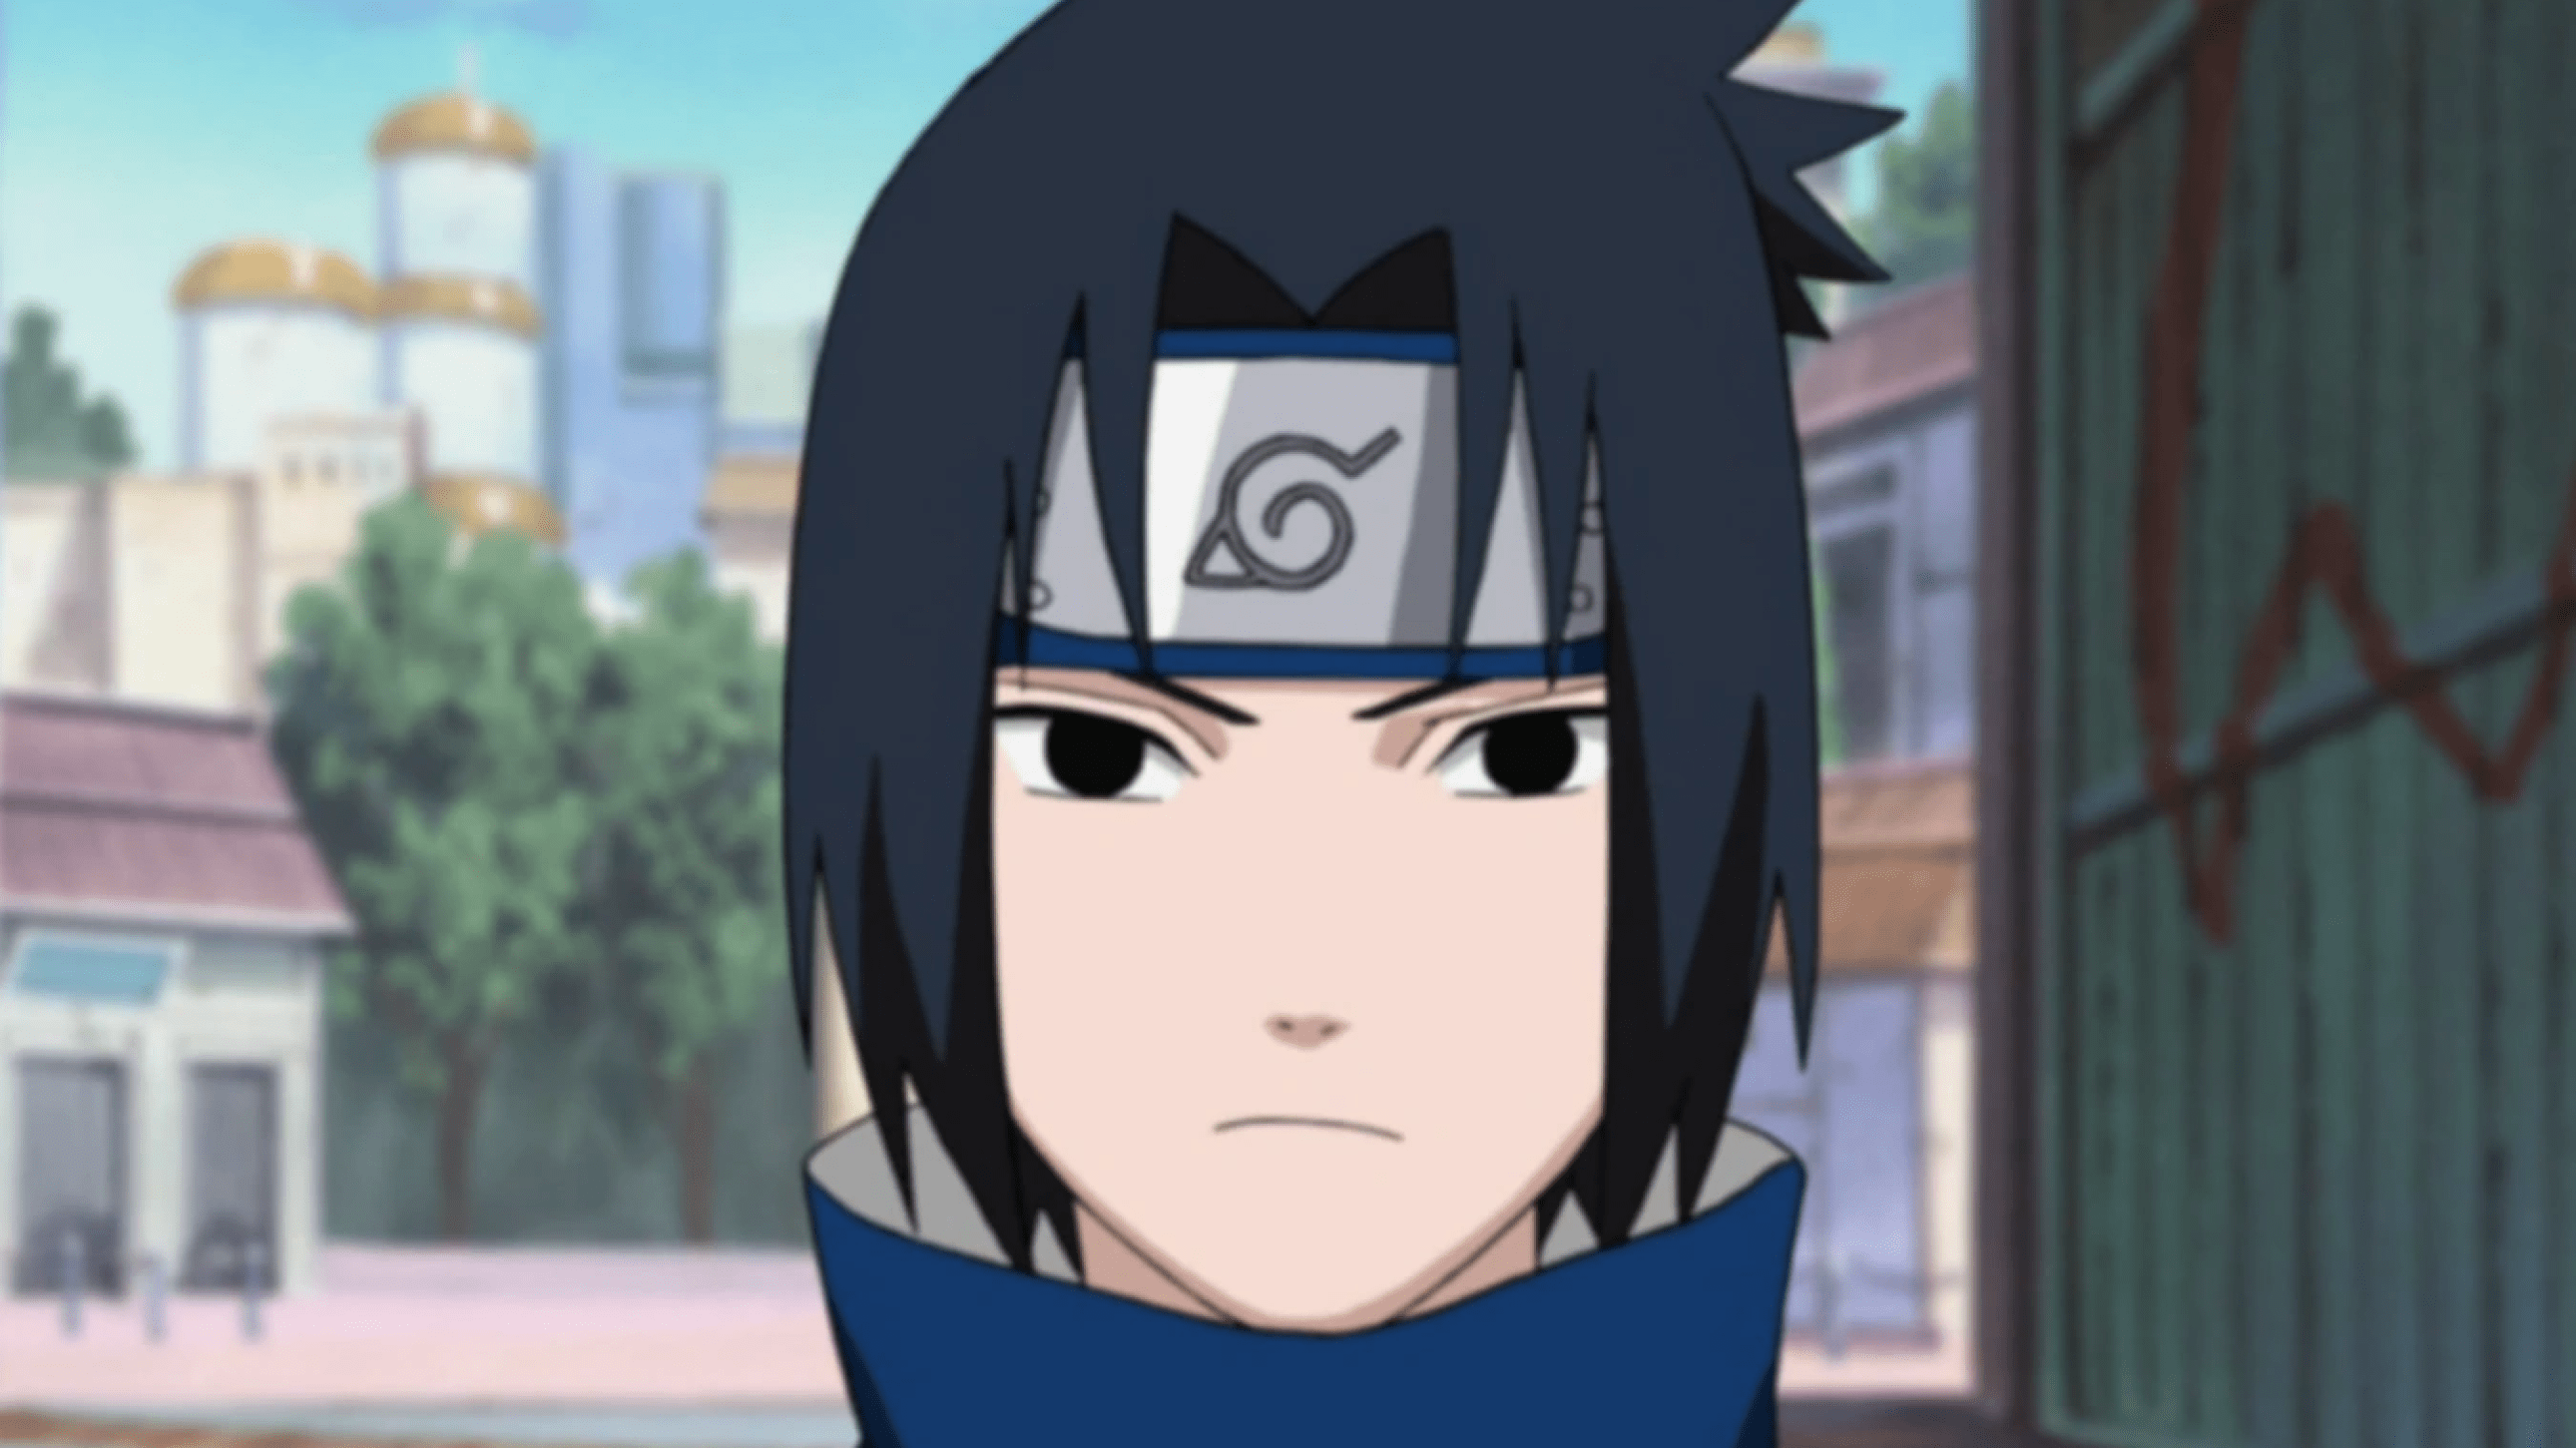 Who is Sasuke in Naruto